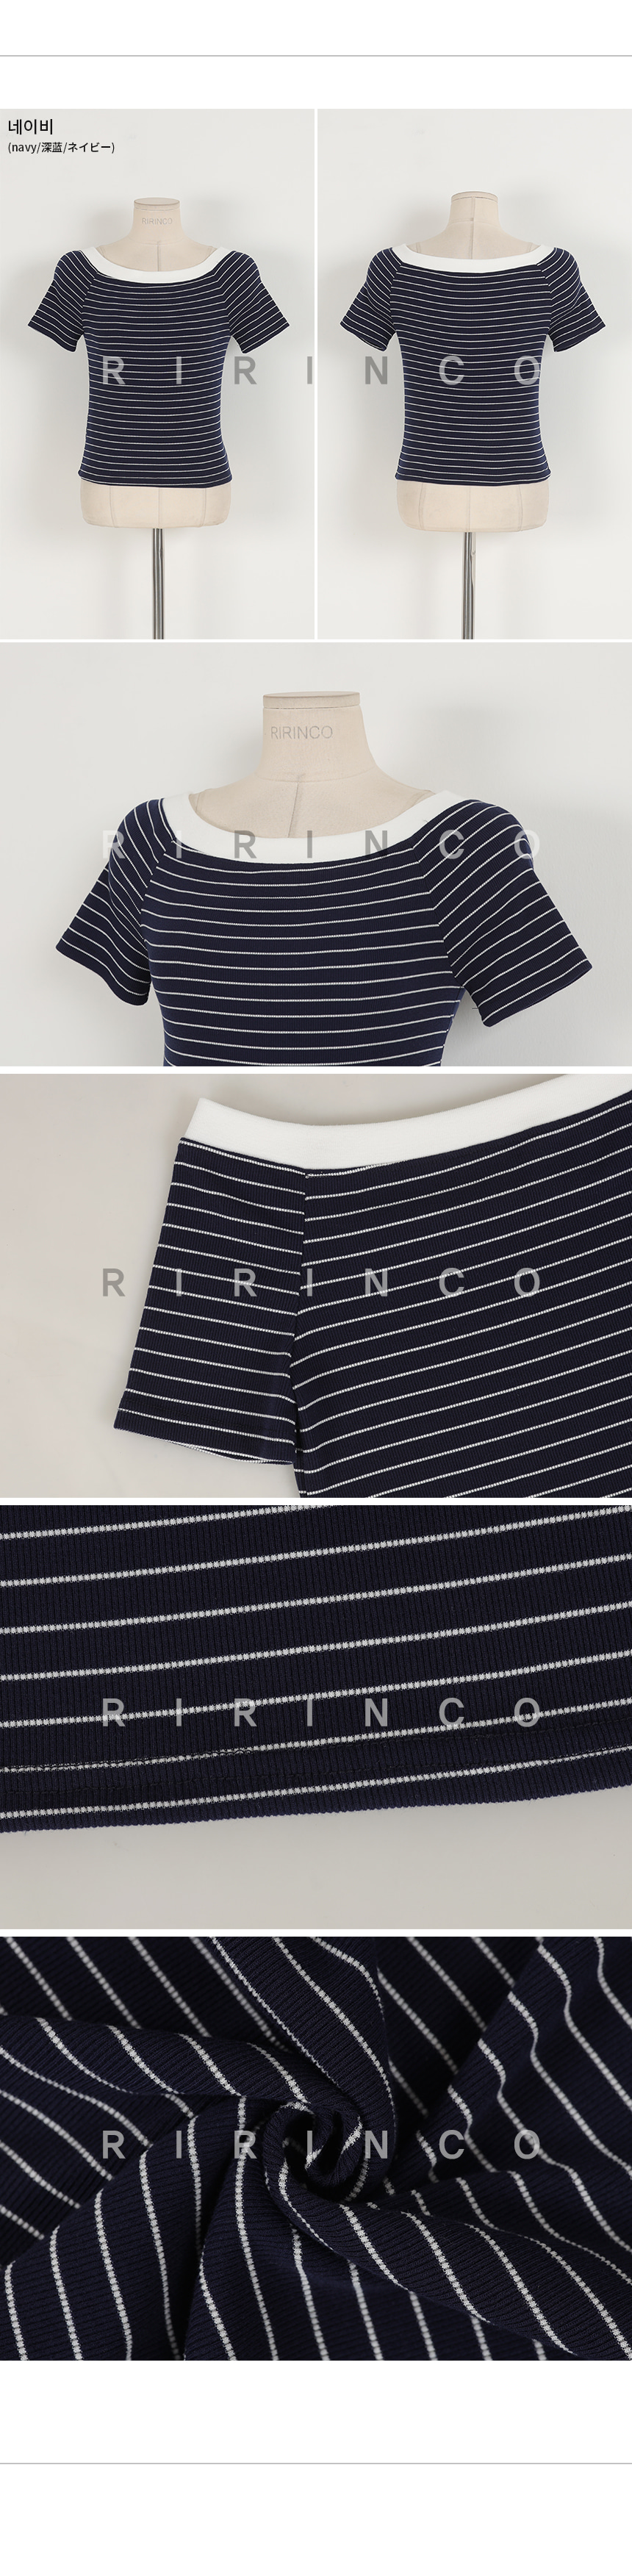 RIRINCO 2wayストライプ柄Tシャツ